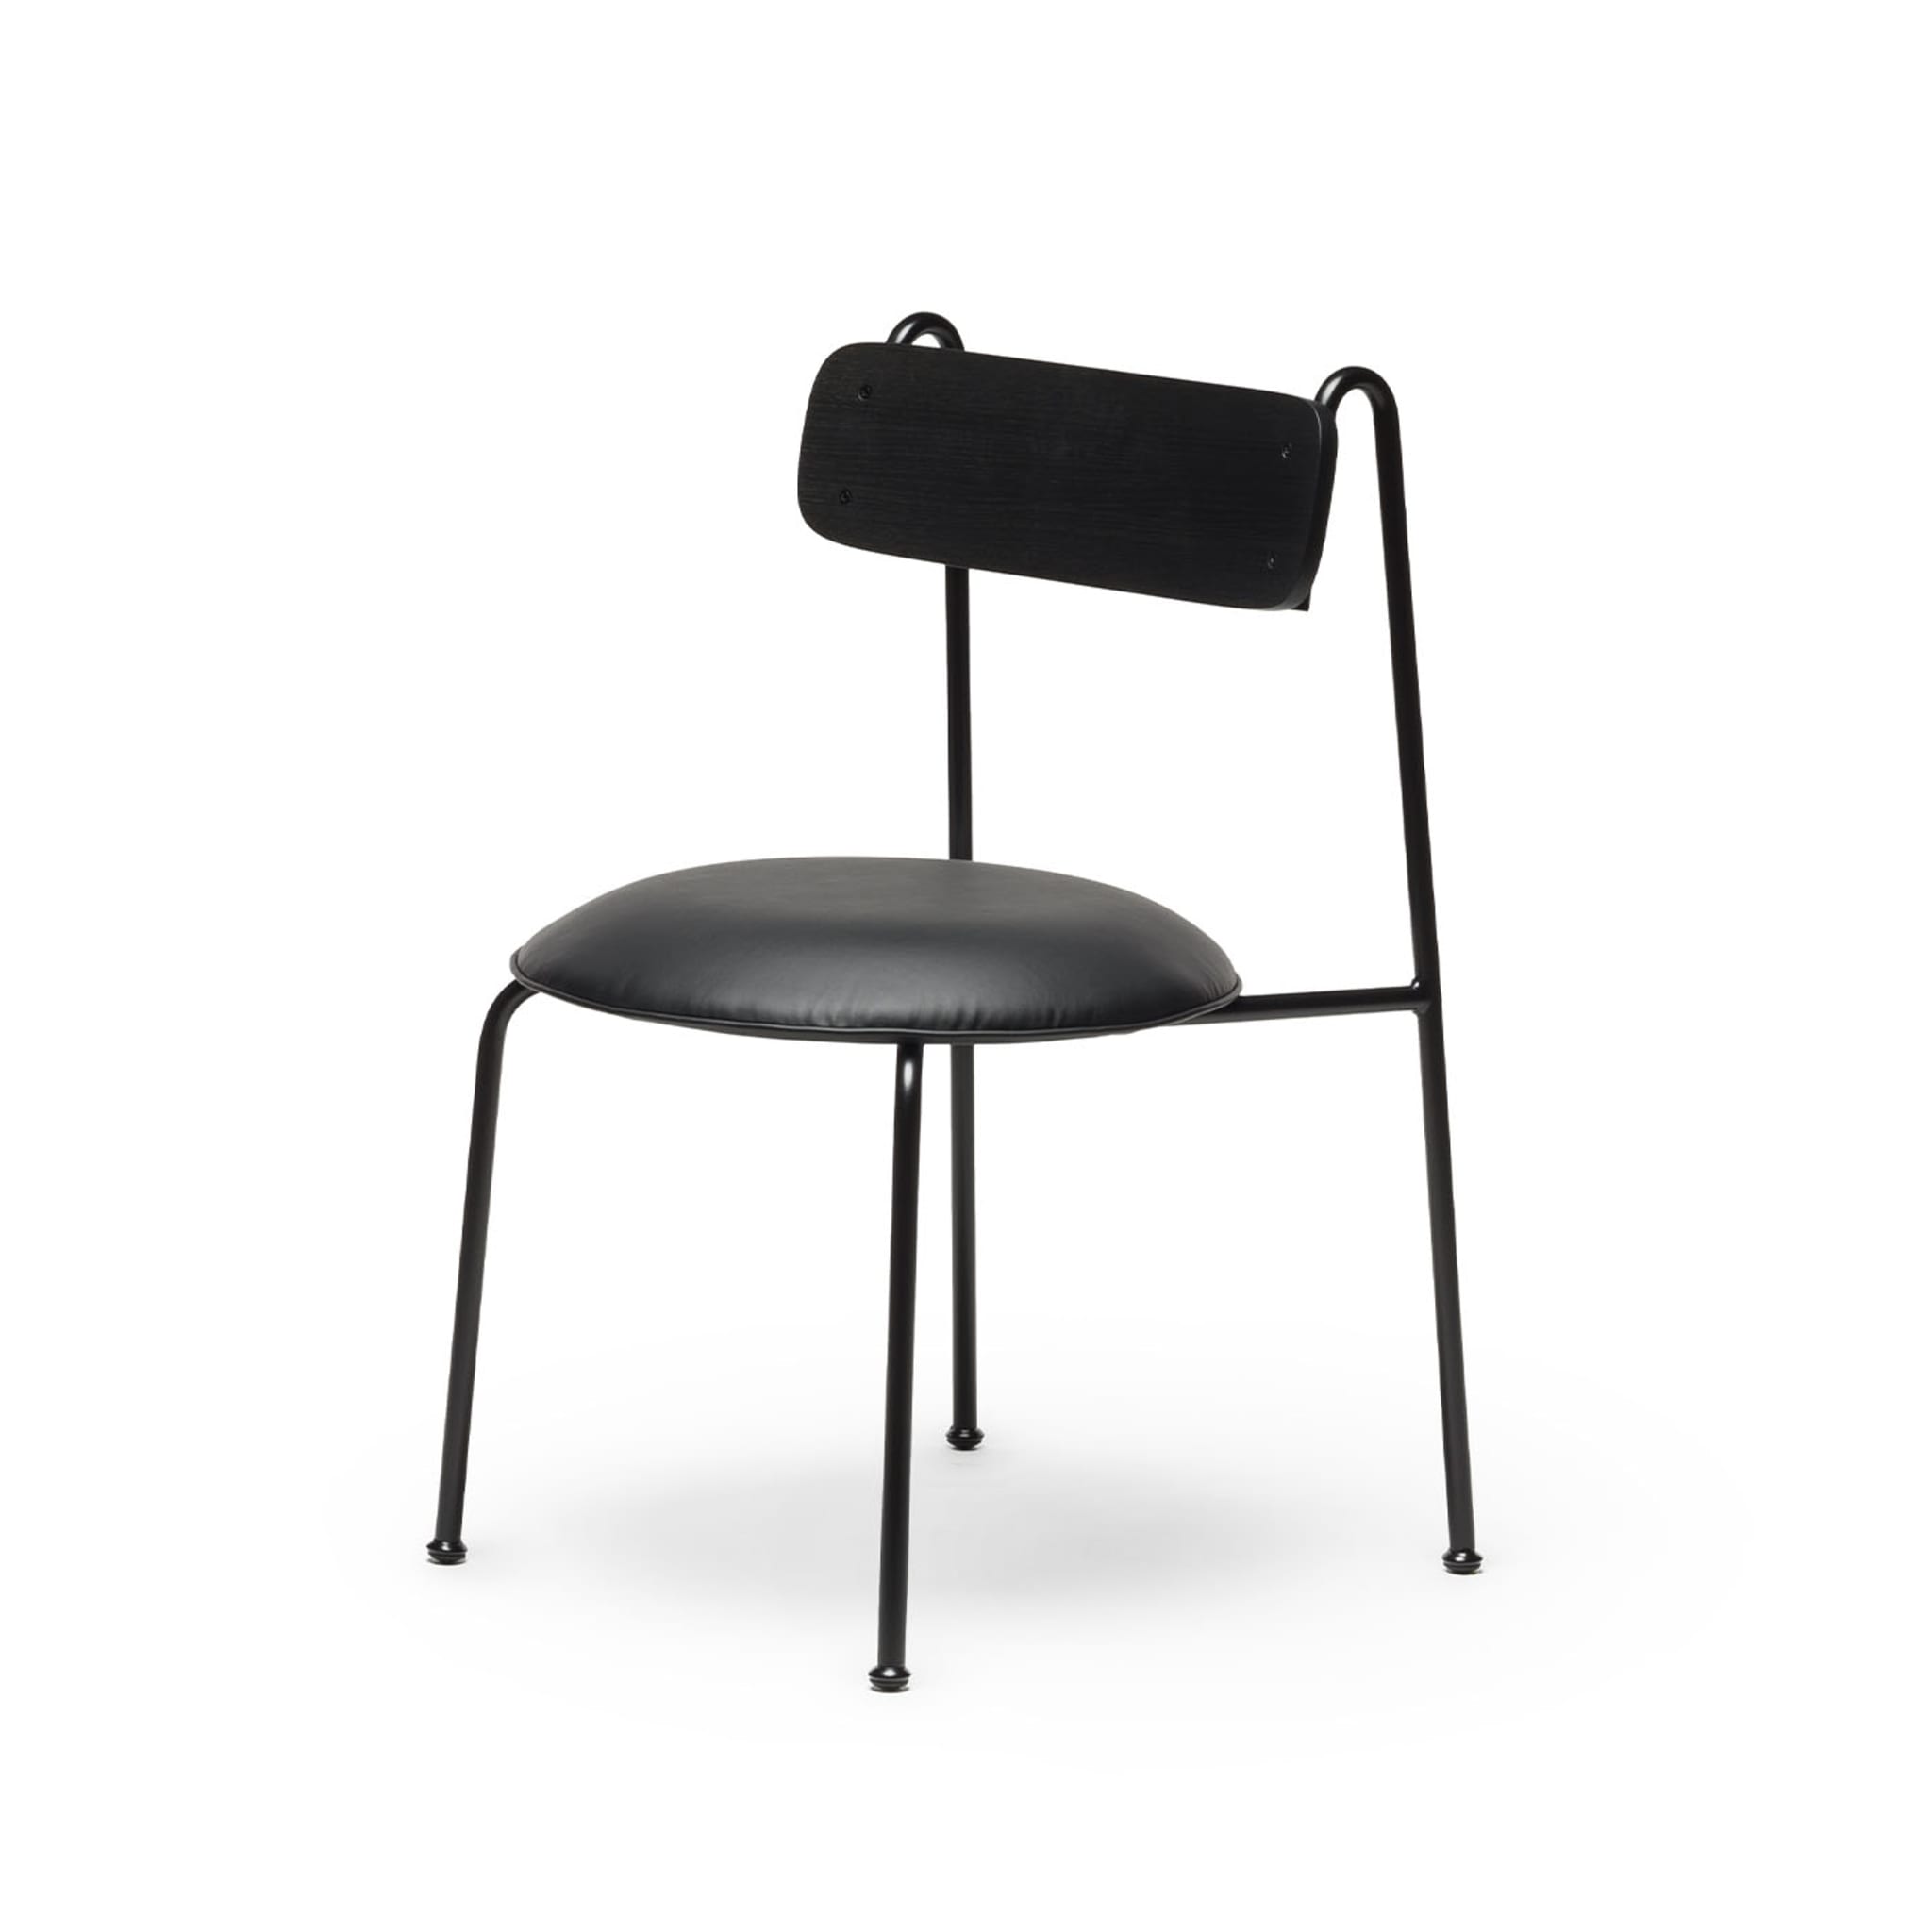 Lena S Black Chair By Designerd - Alternative view 3